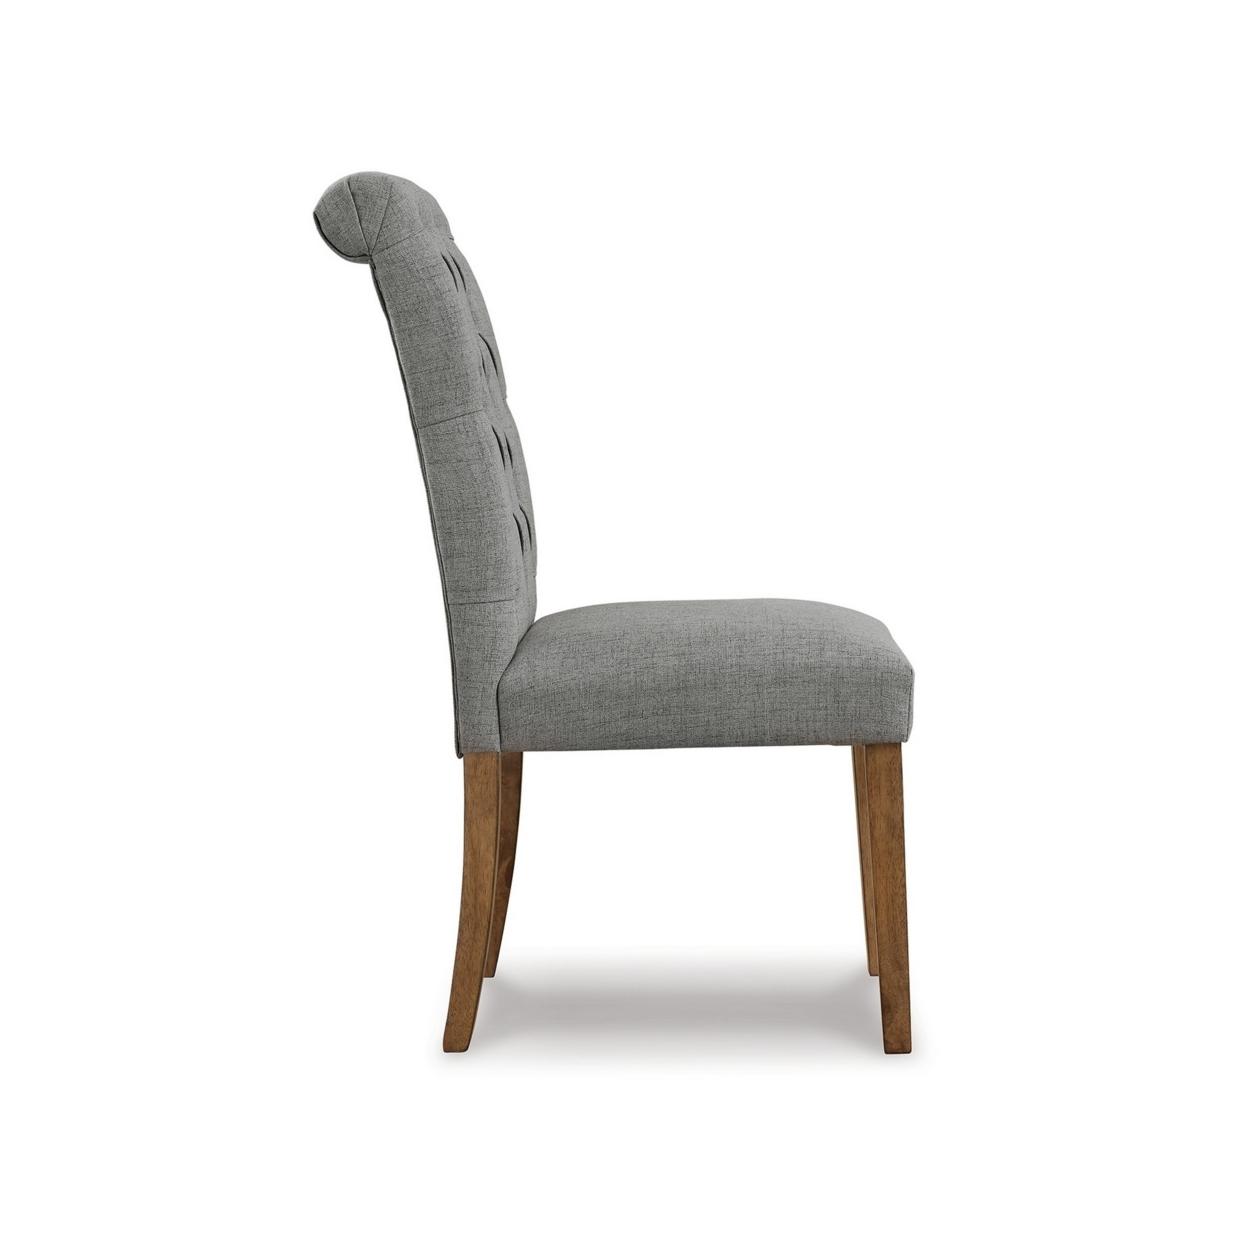 18 Inch Walnut Wood Dining Chair, Set Of 2, Gray Upholstery, Tufted Back- Saltoro Sherpi